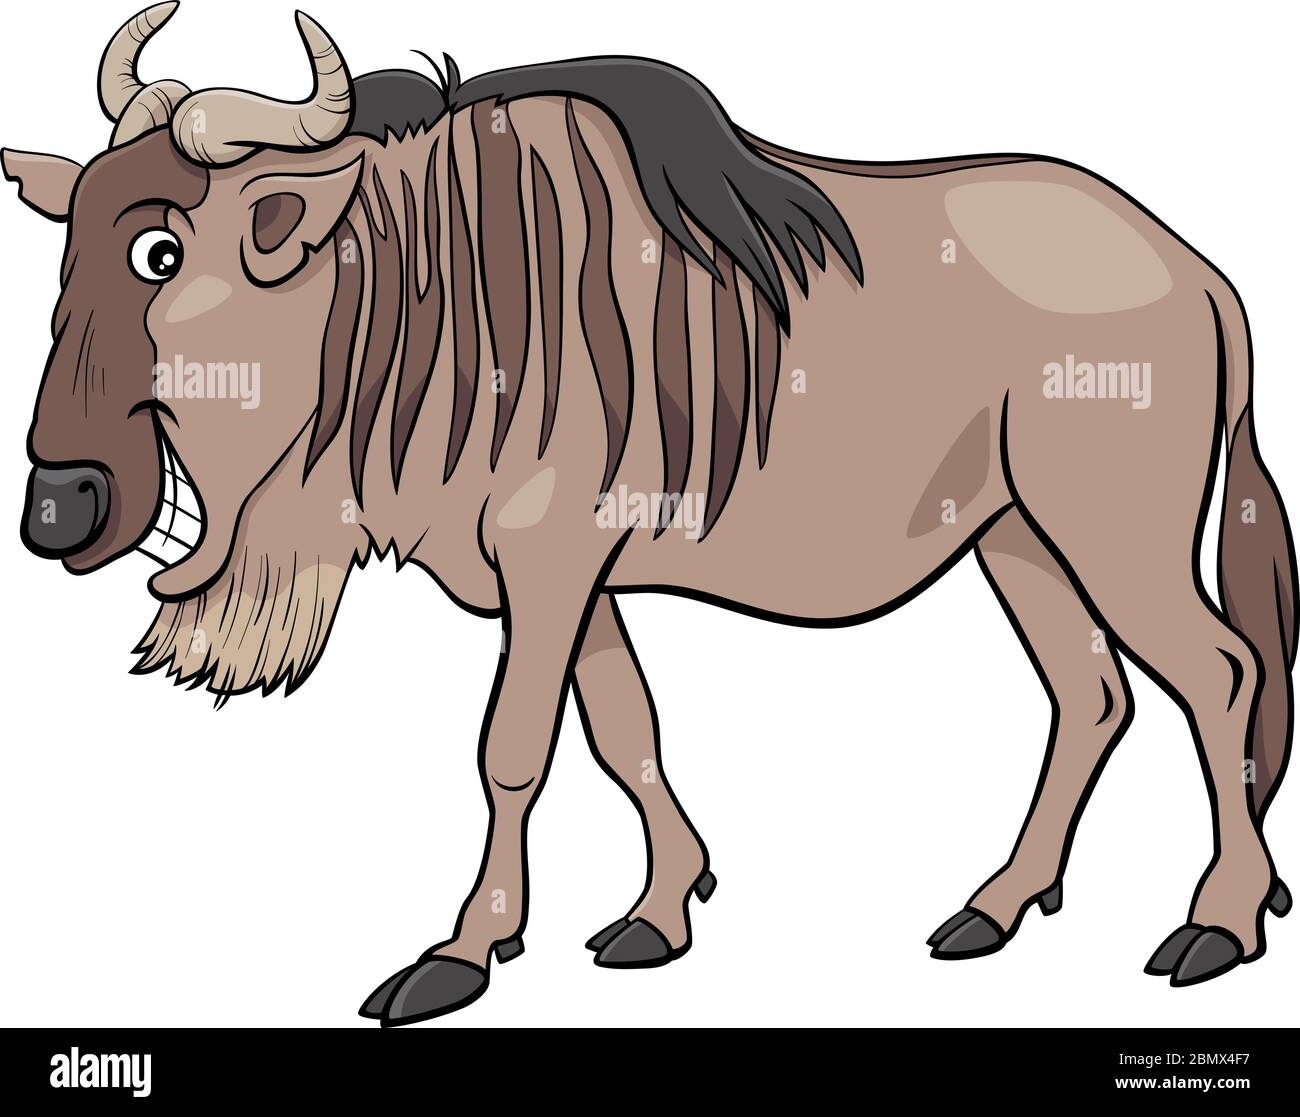 Cartoon Illustration of Gnu Antelope or Blue Wildebeest African Wild Animal Character Stock Vector